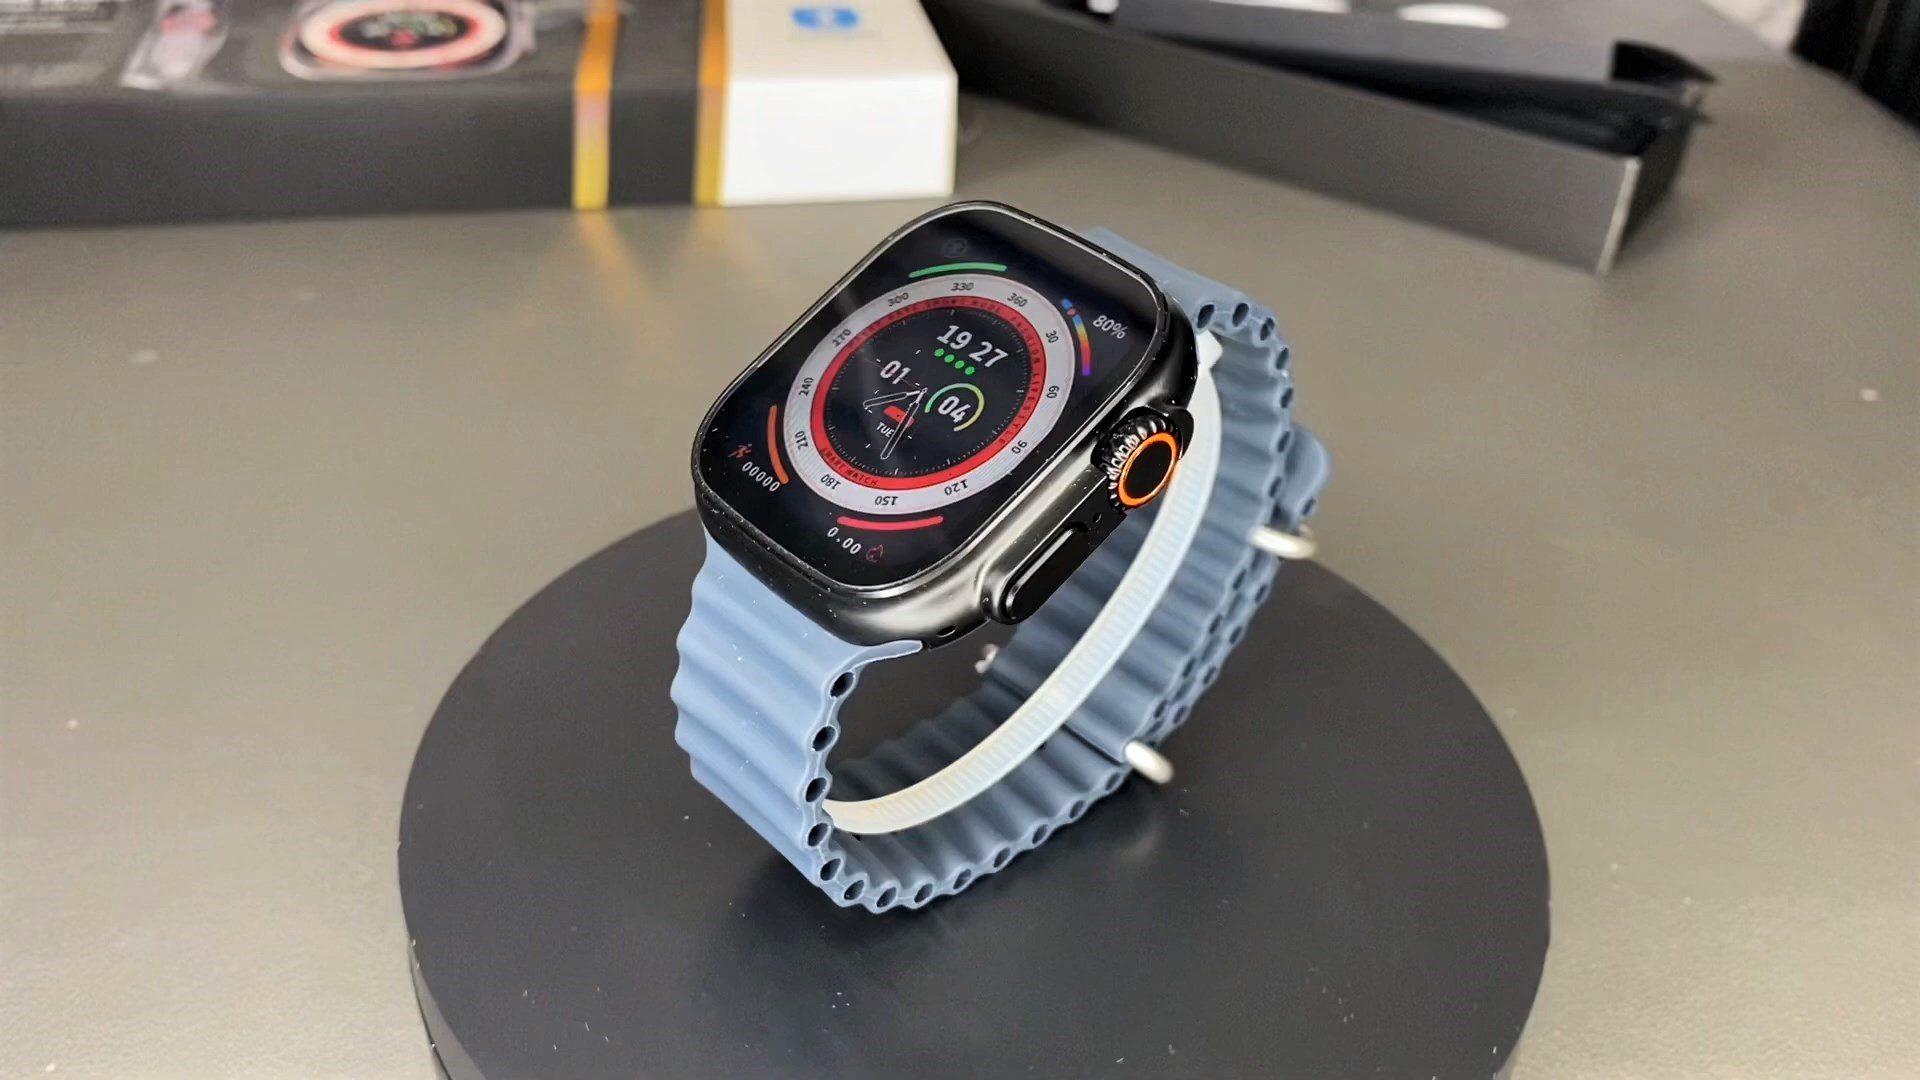 ZD8 Ultra Apple Watch Ultra Clone Review